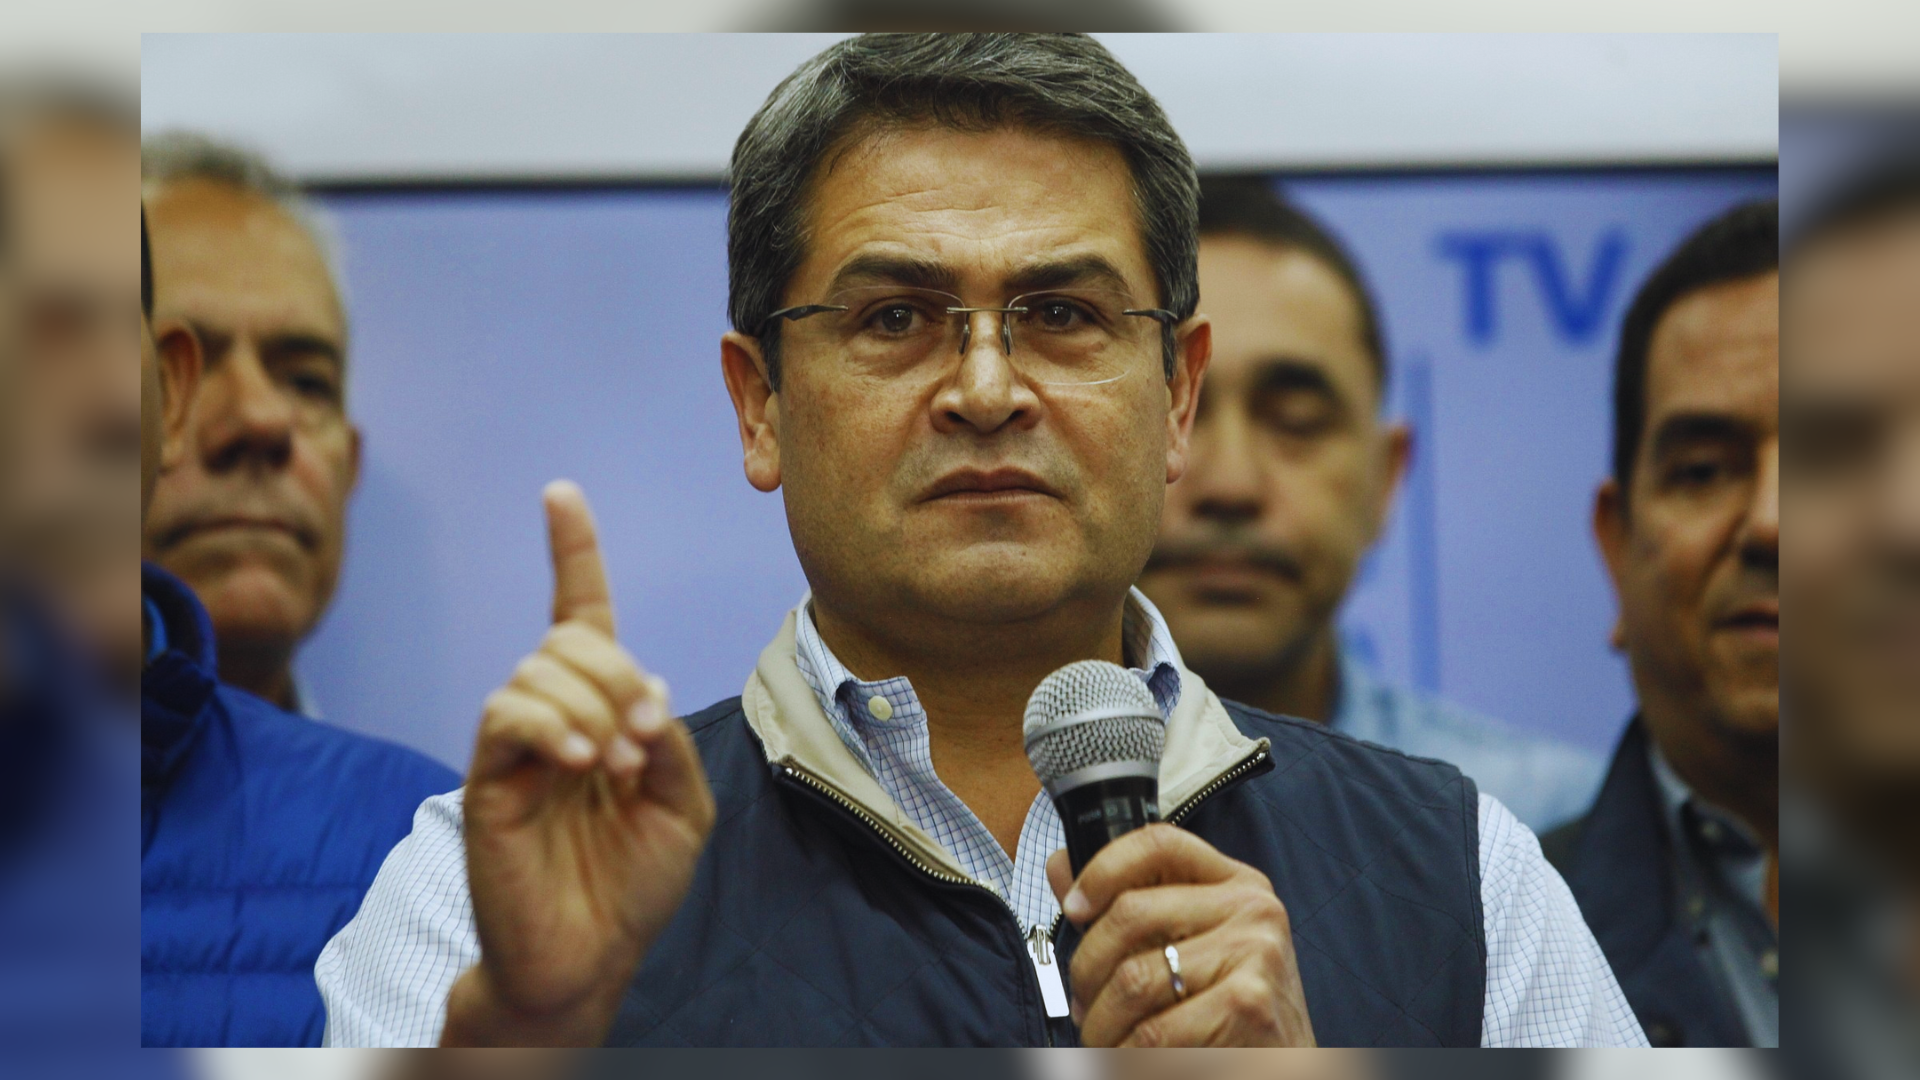 Honduras Ex-President, Juan Orlando Hernández Sentenced To 45 Years In Prison For Drug Trafficking